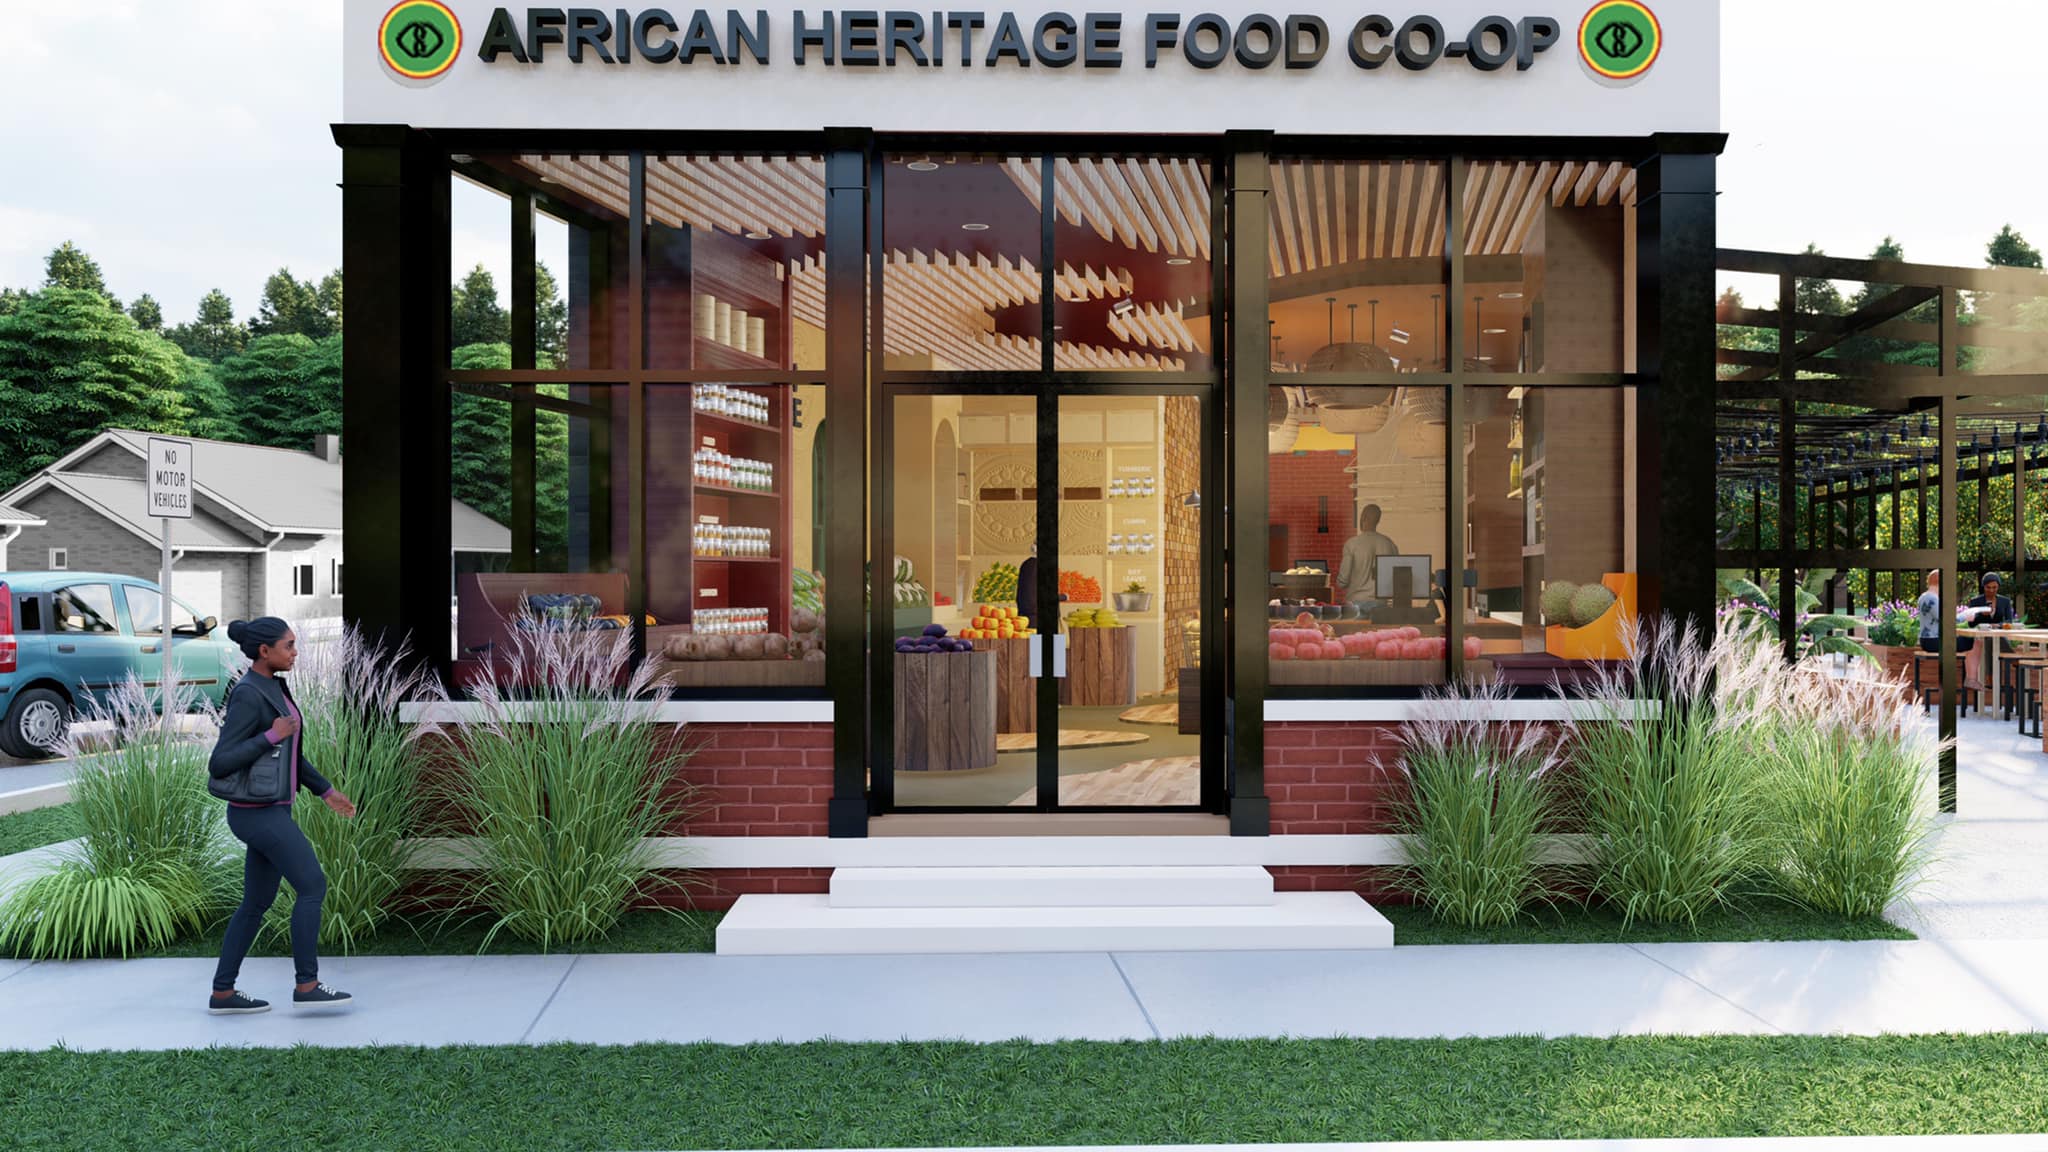 Black History Month Spotlight: African Heritage Food Co-Op Image